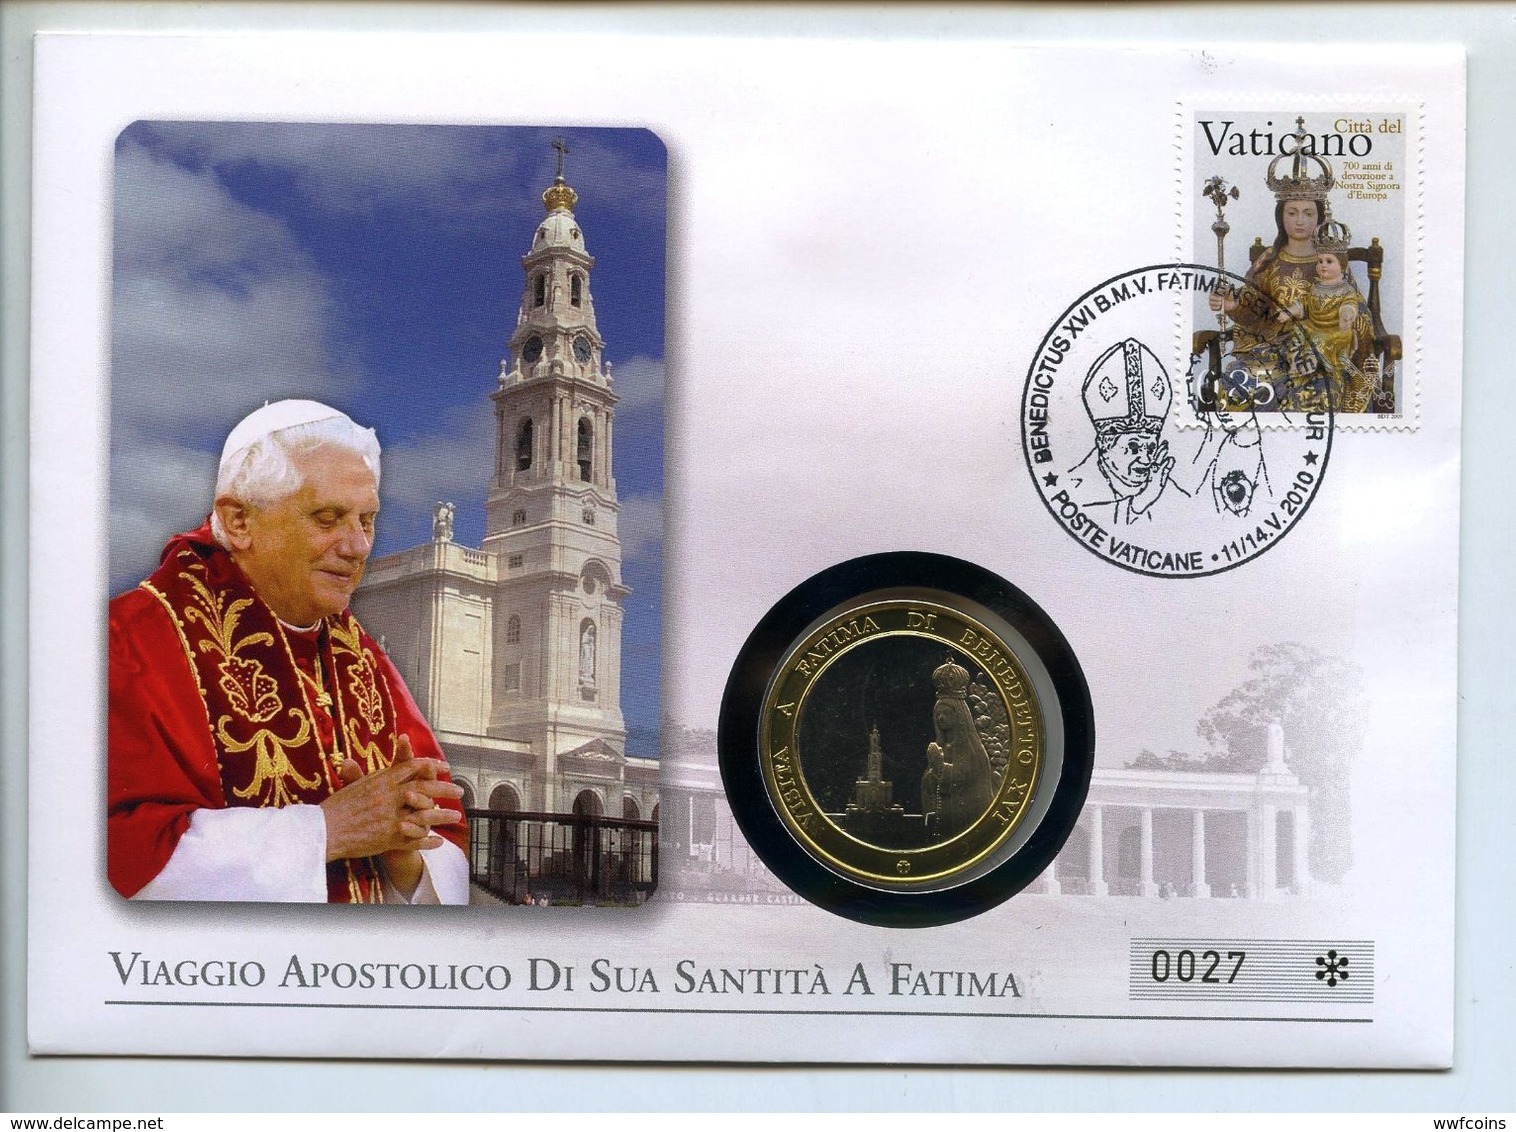 POSTCARD STAMP 5 X BIMETALLIC VATICAN CITY POPE PAPA 02 VIA FATIMA PEACE HEROIC CYPRUS GIOVANNI PAOLO II